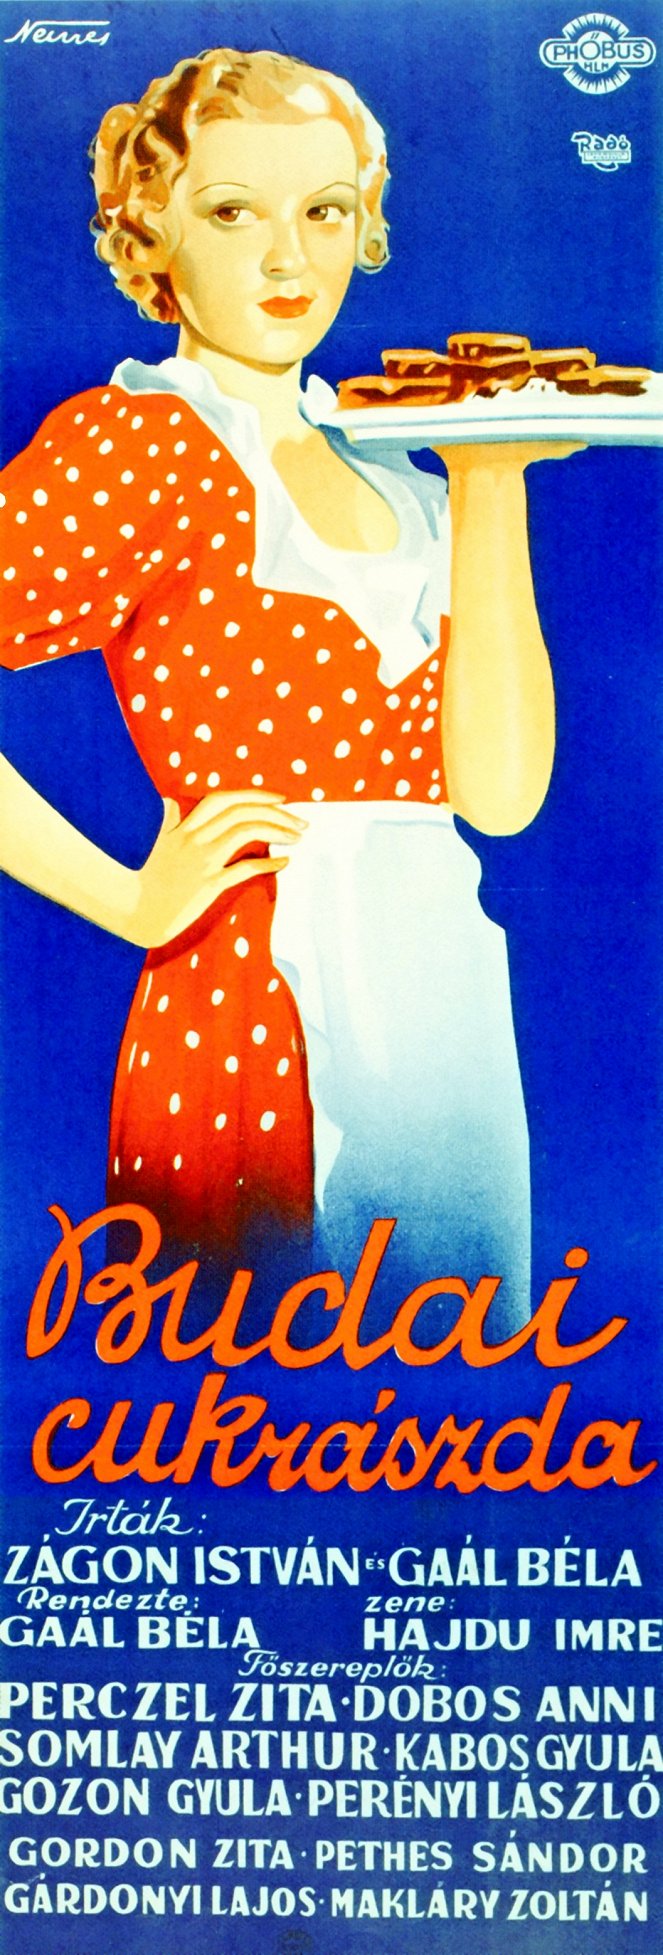 Budai cukrászda - Plakaty